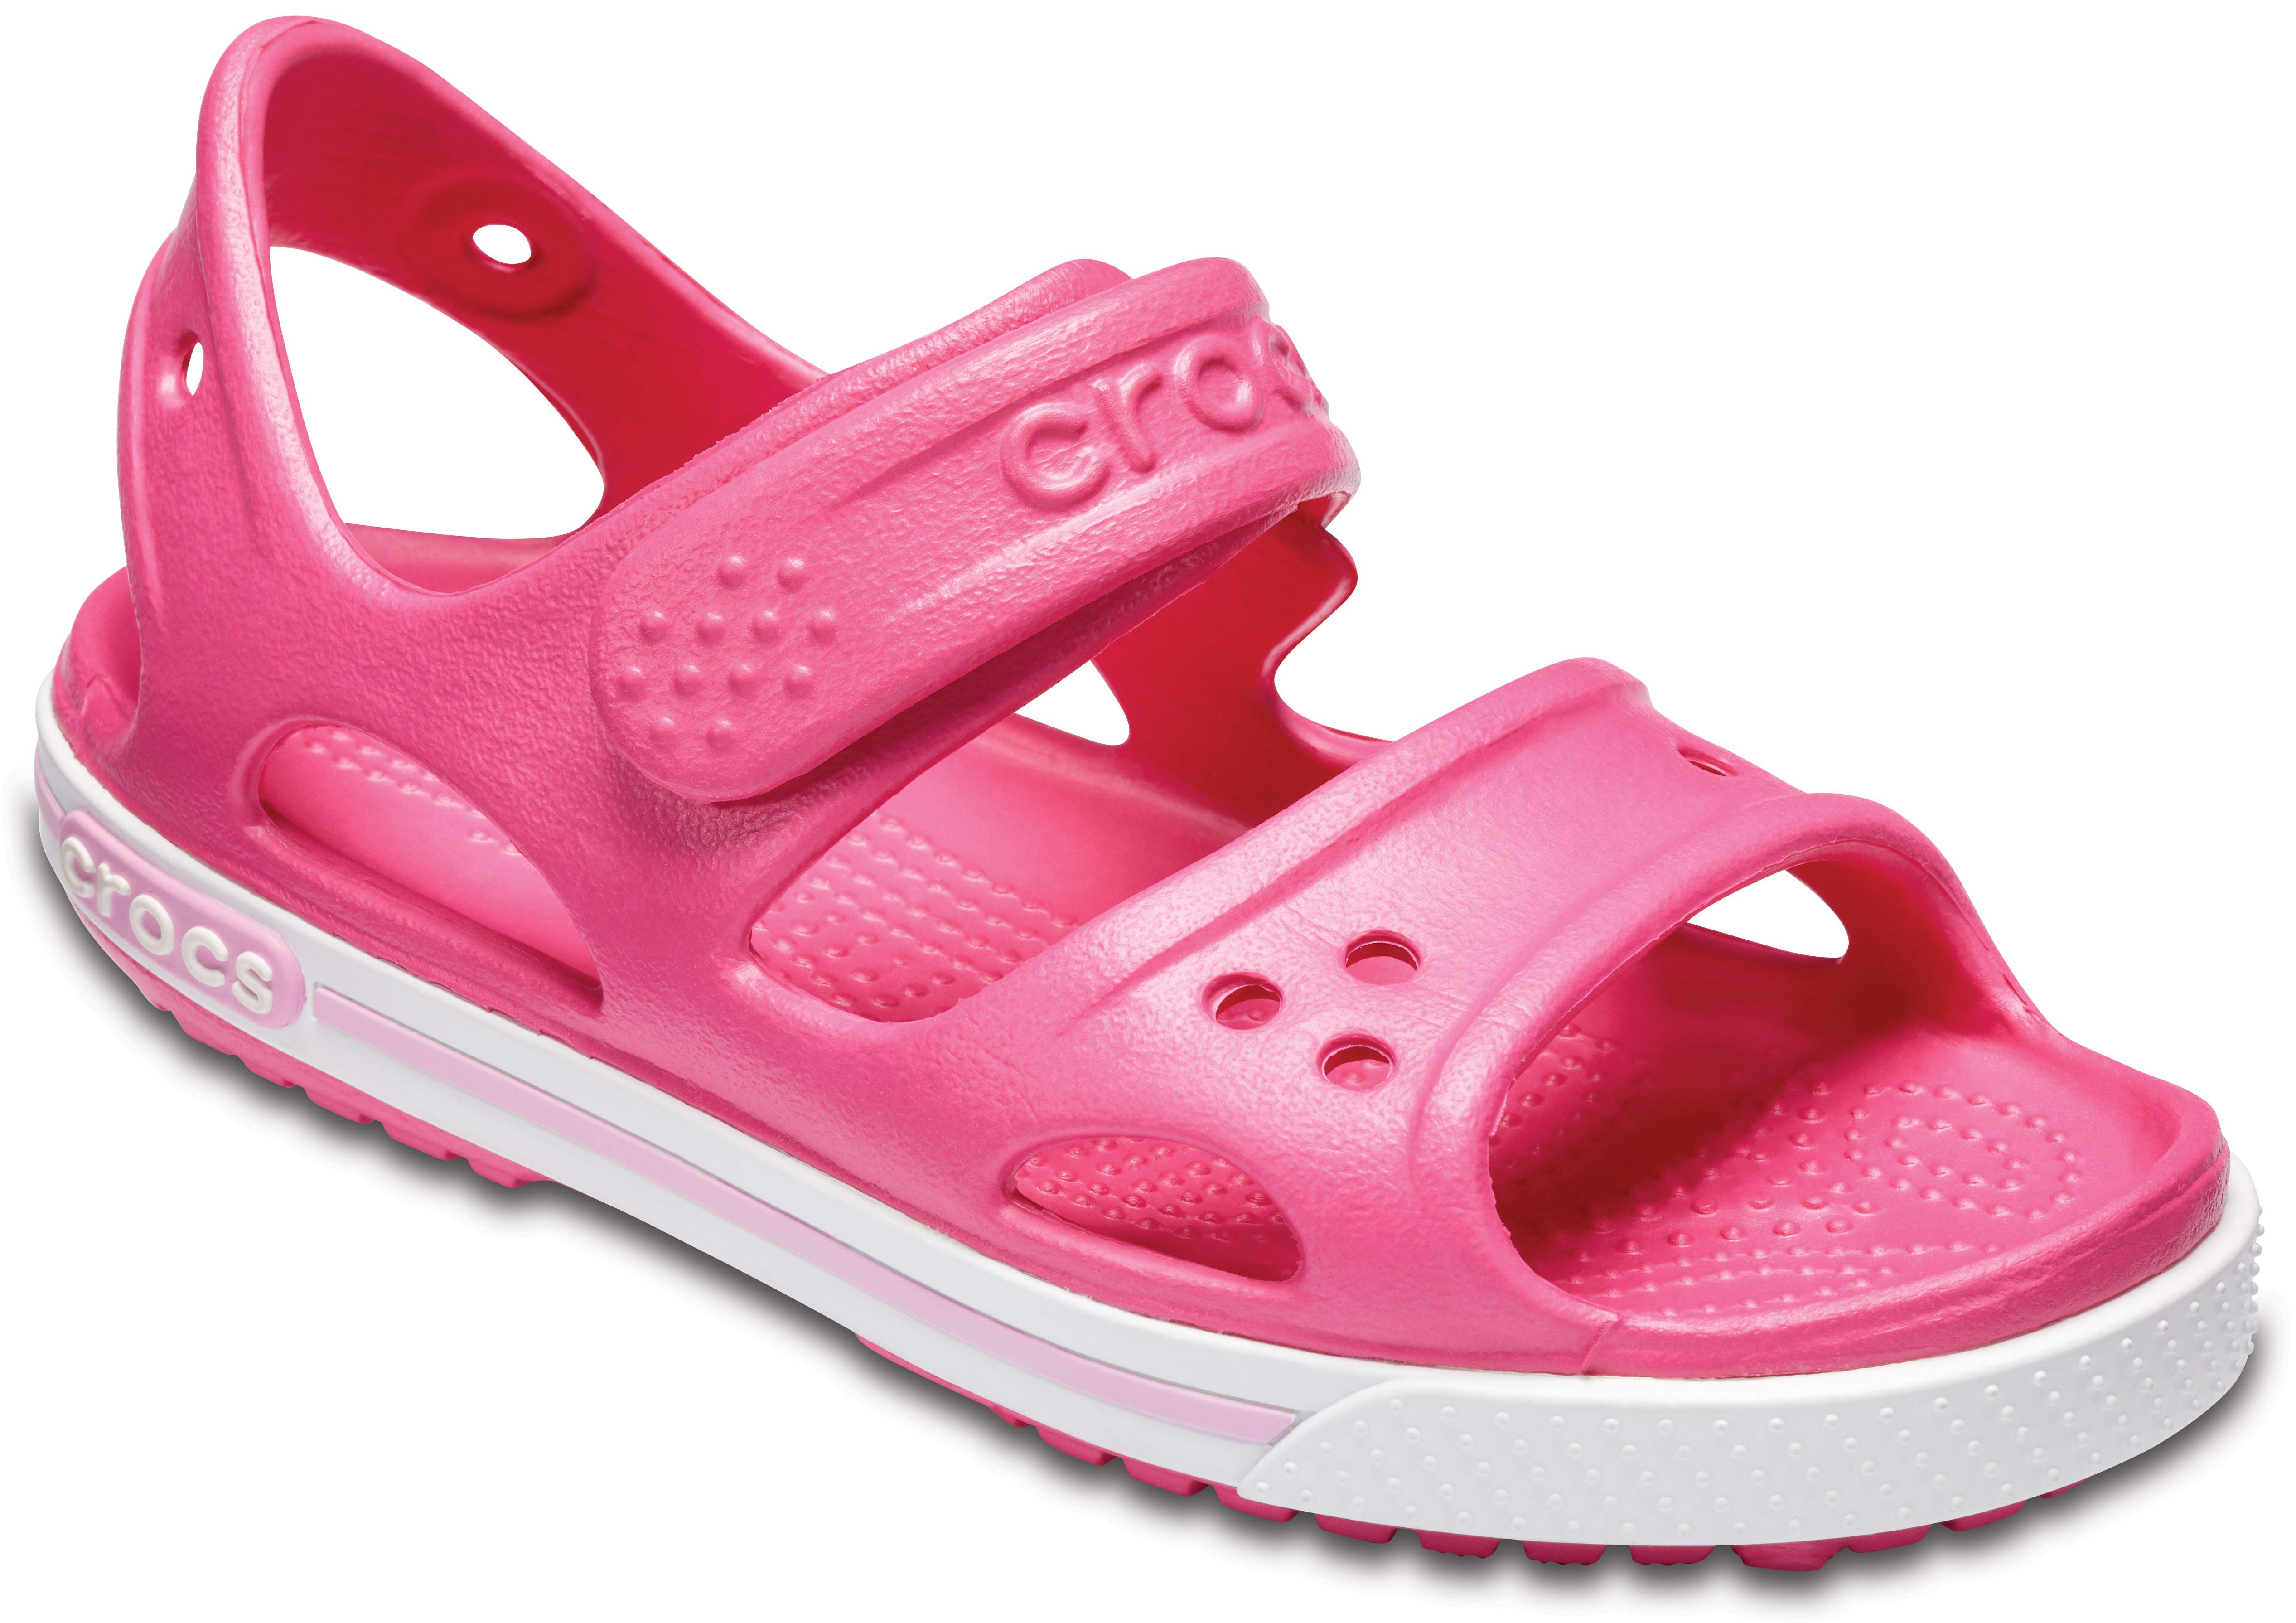 crocs crocband sandals